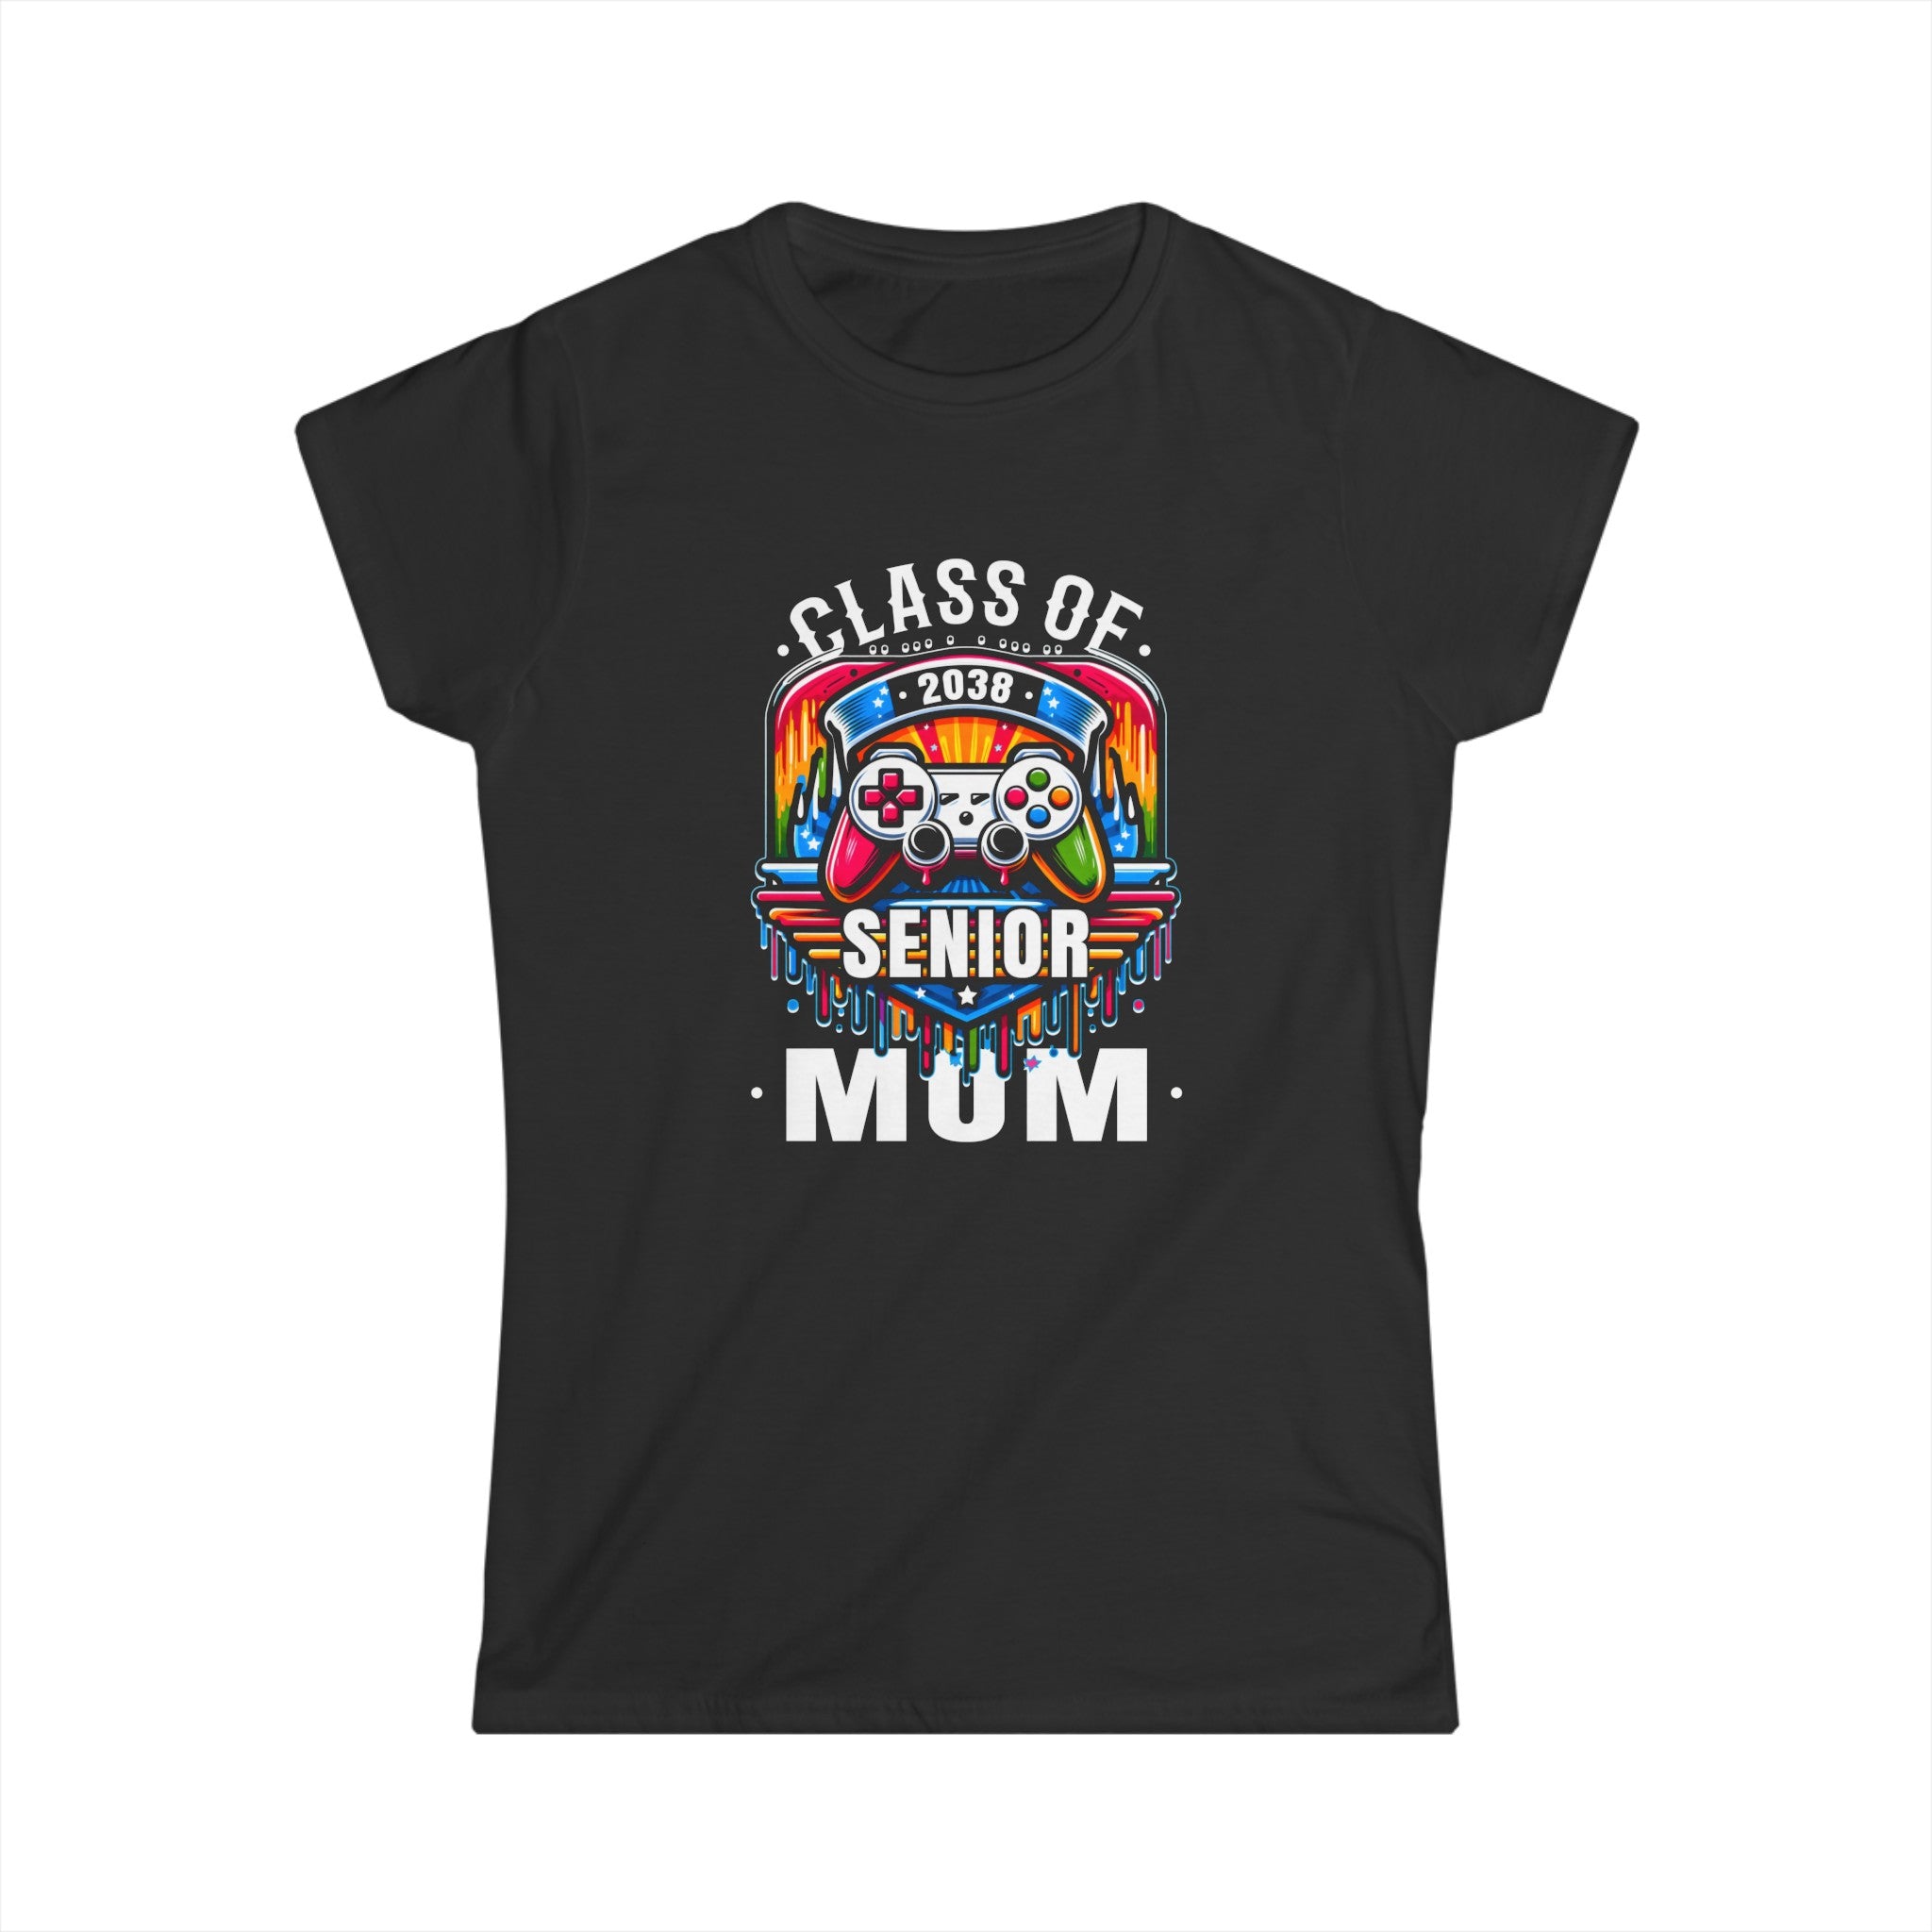 Senior 2038 Mom Graduate Cute Class of 2038 Shirt 2038 Shirts for Women